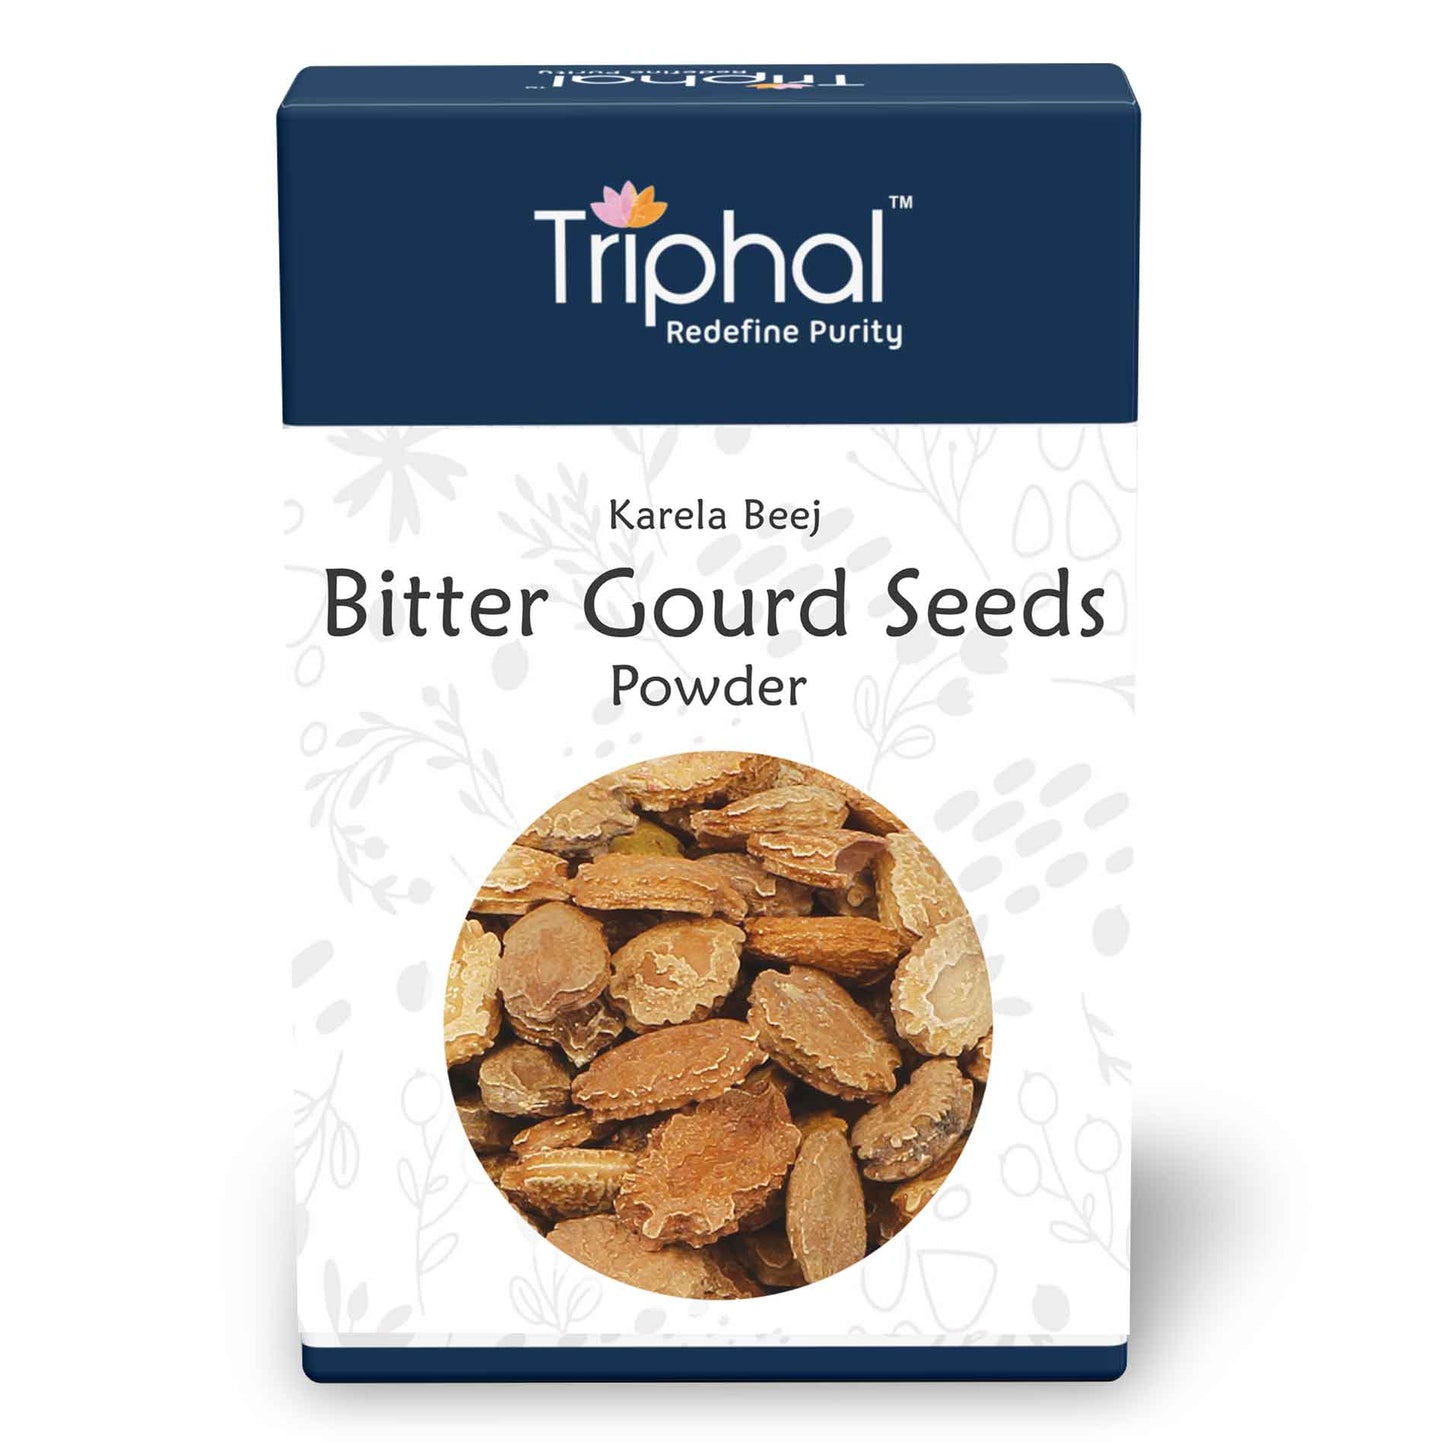 Bitter Gourd Seeds Powder - Karela Beej Churn Pure and Natural